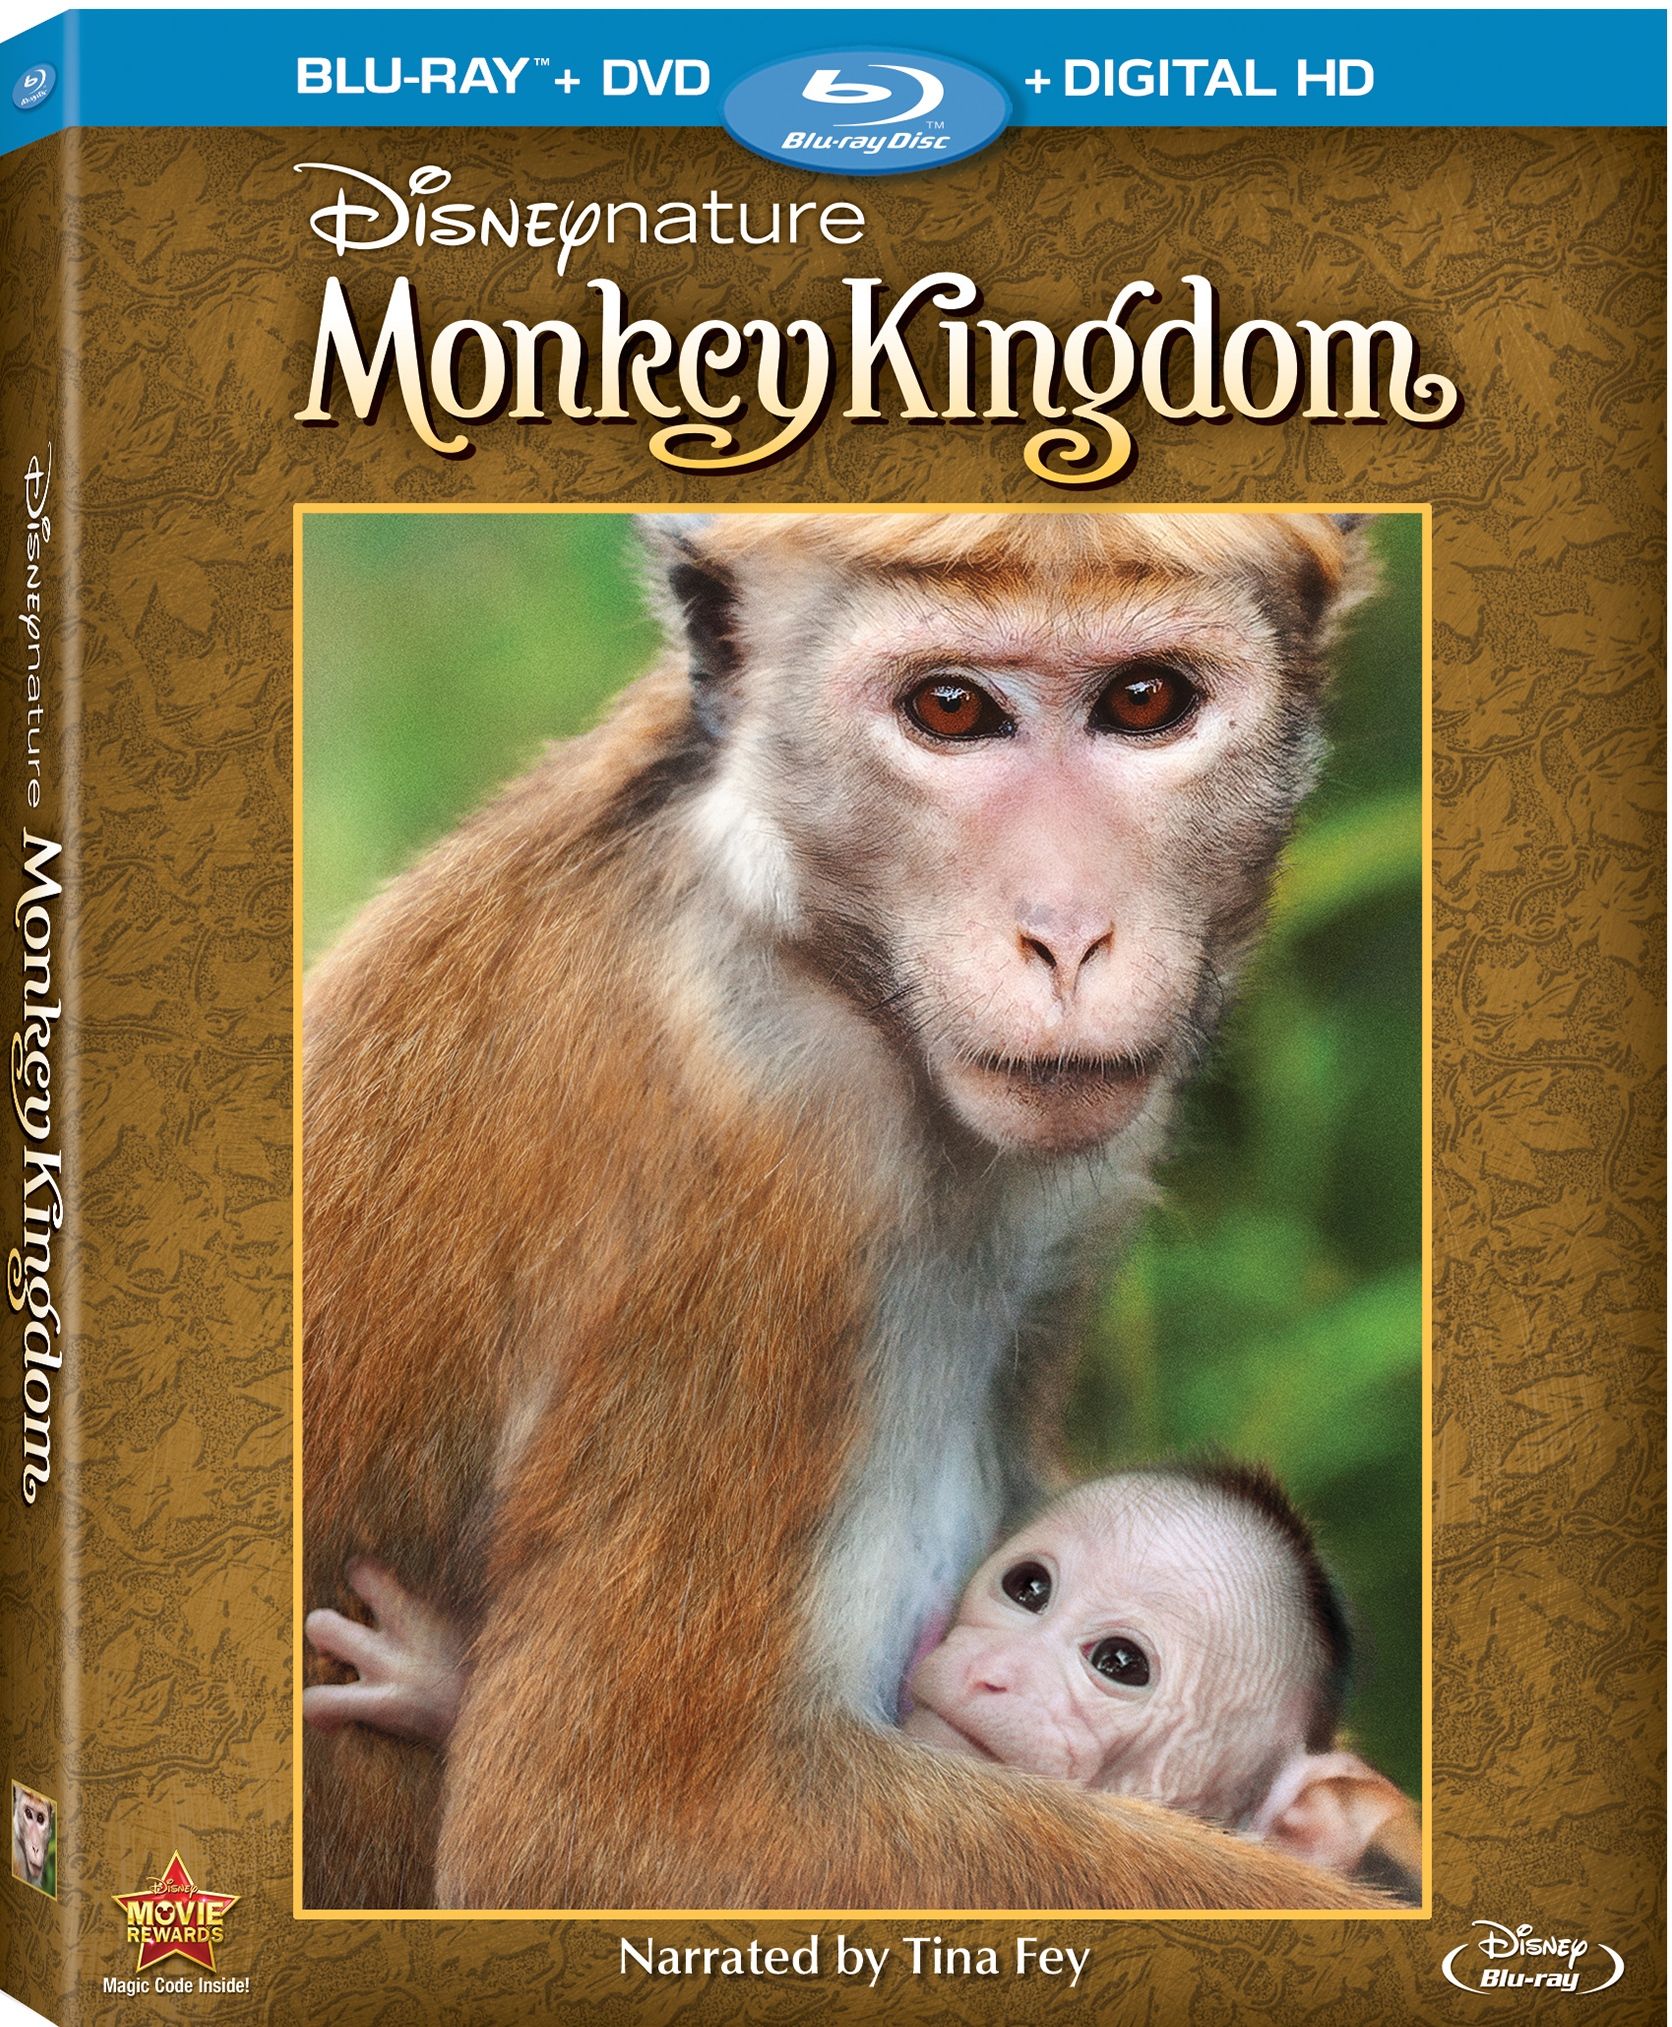 Disneynature’s “Monkey Kingdom” Swings to Blu-ray 9/15